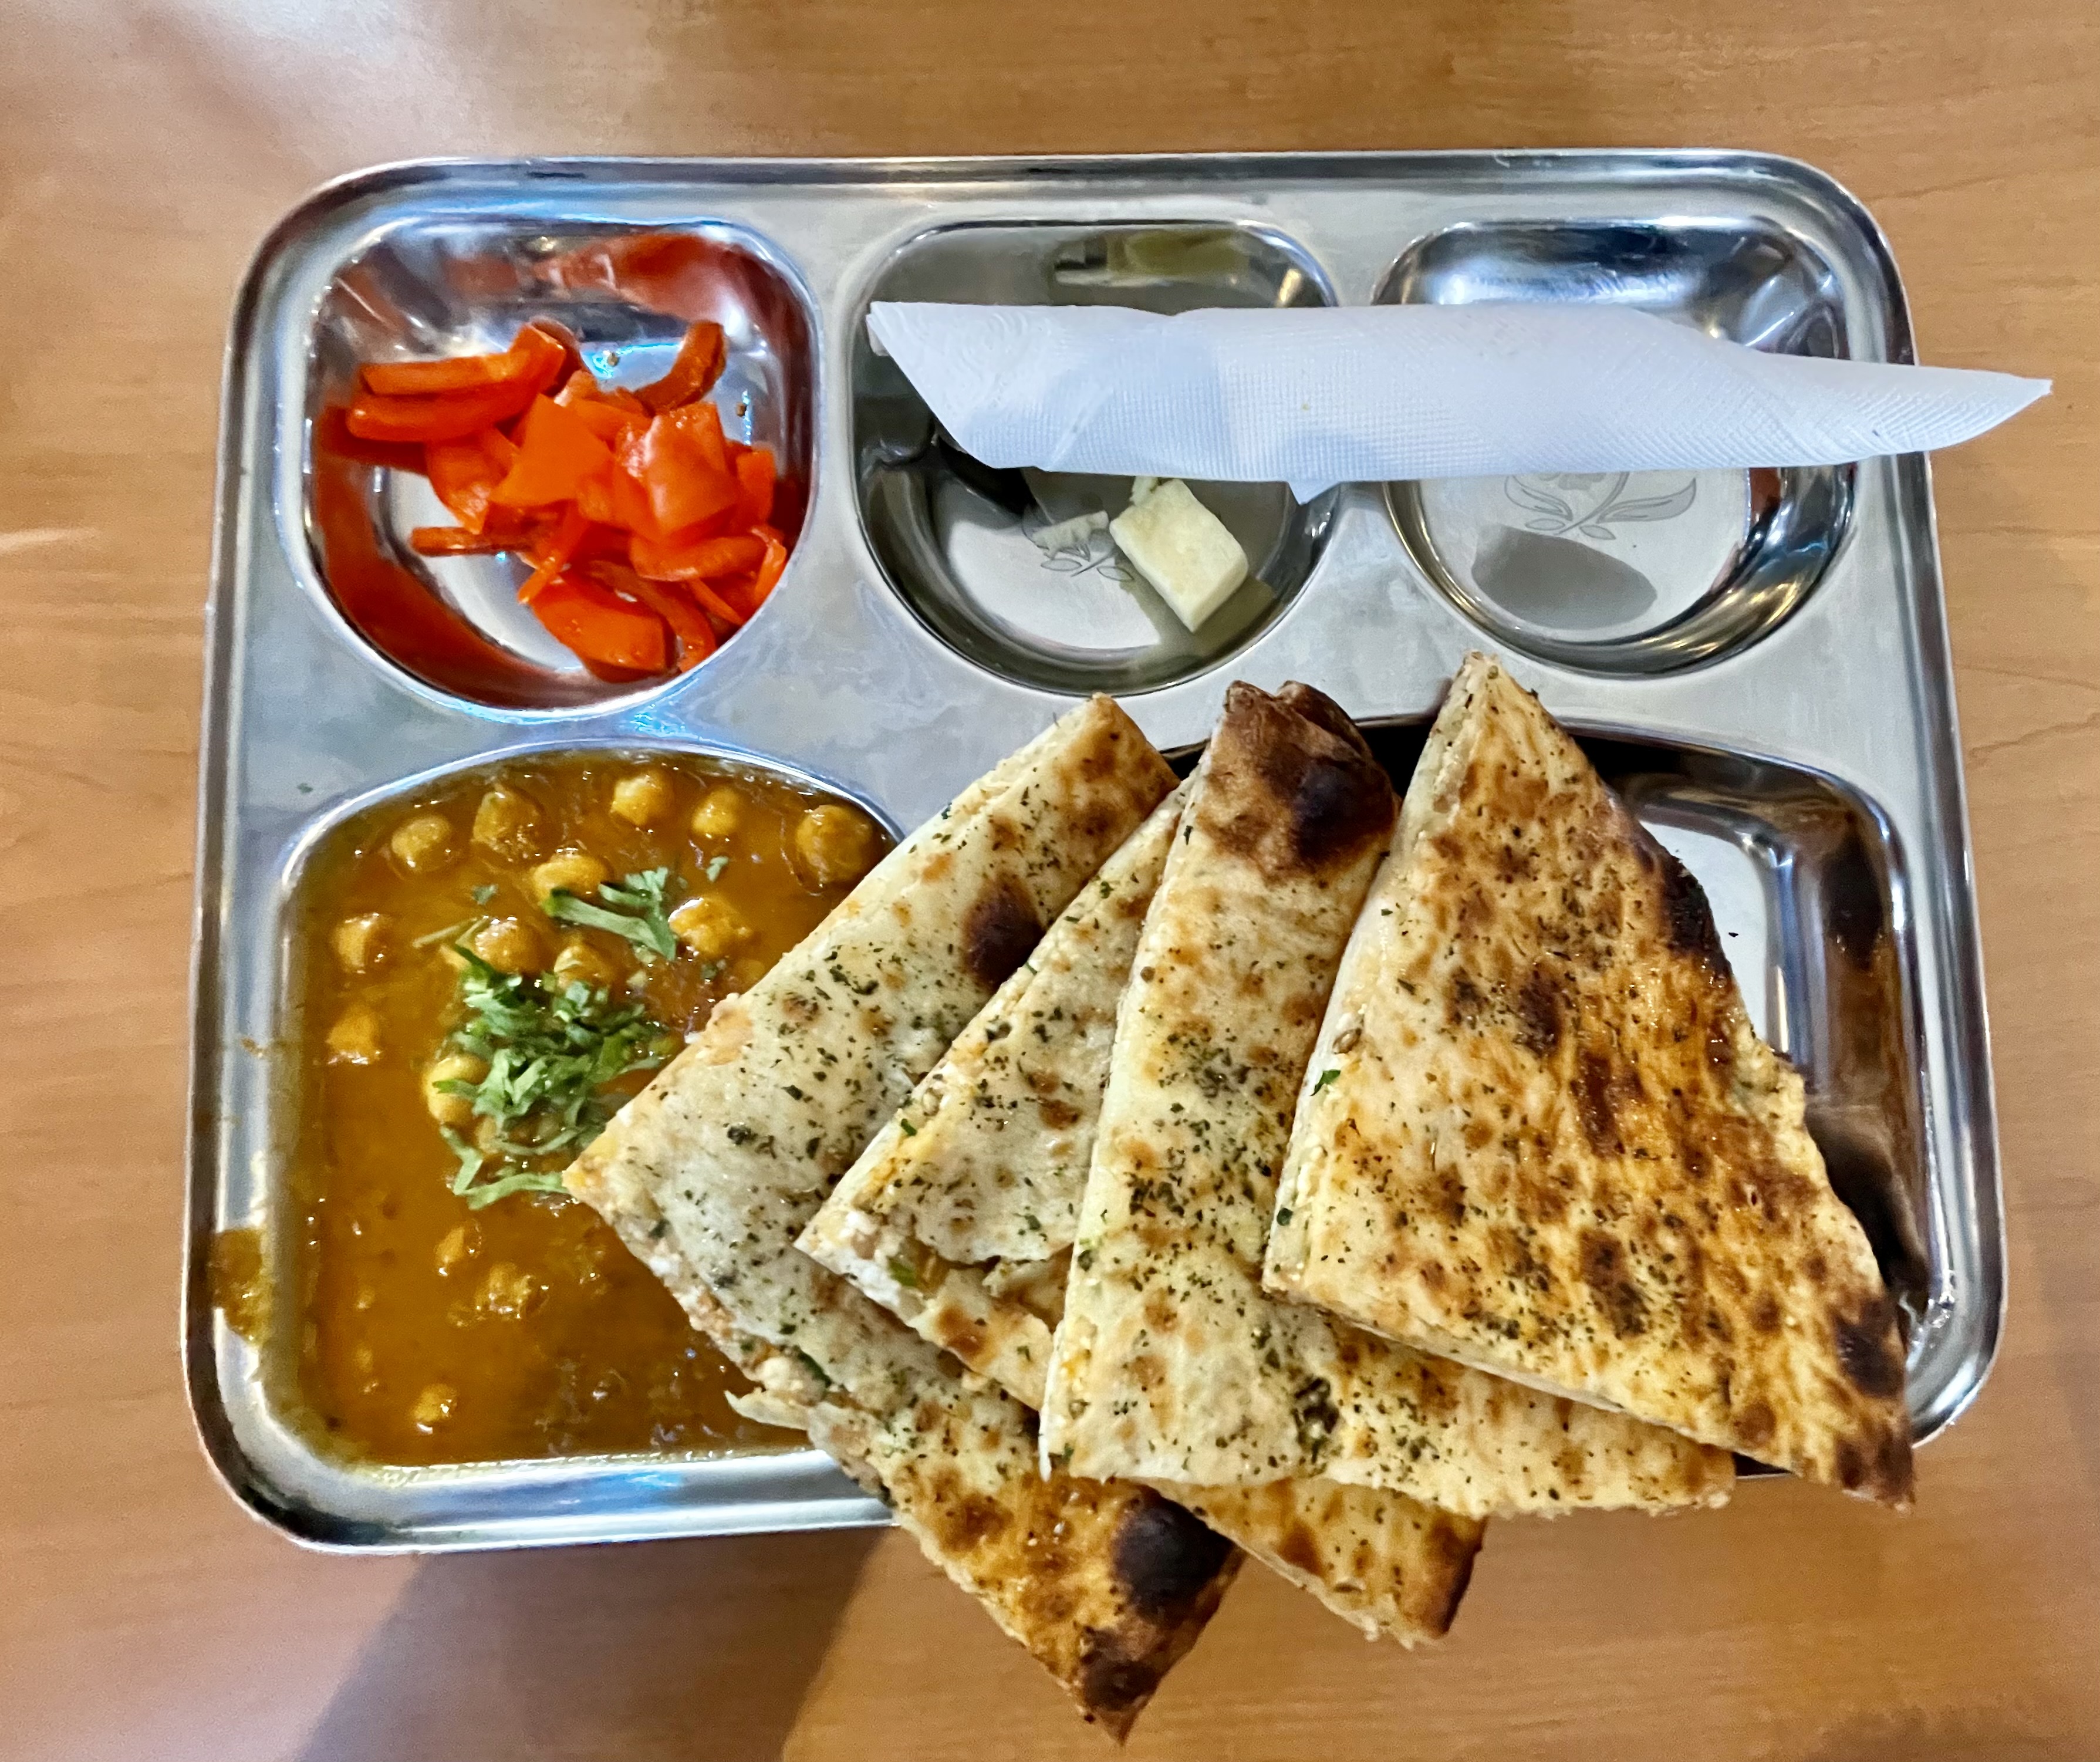 Amristari kulcha, one of Punjabi Canteen's specialities, and a popular dish from Punjab